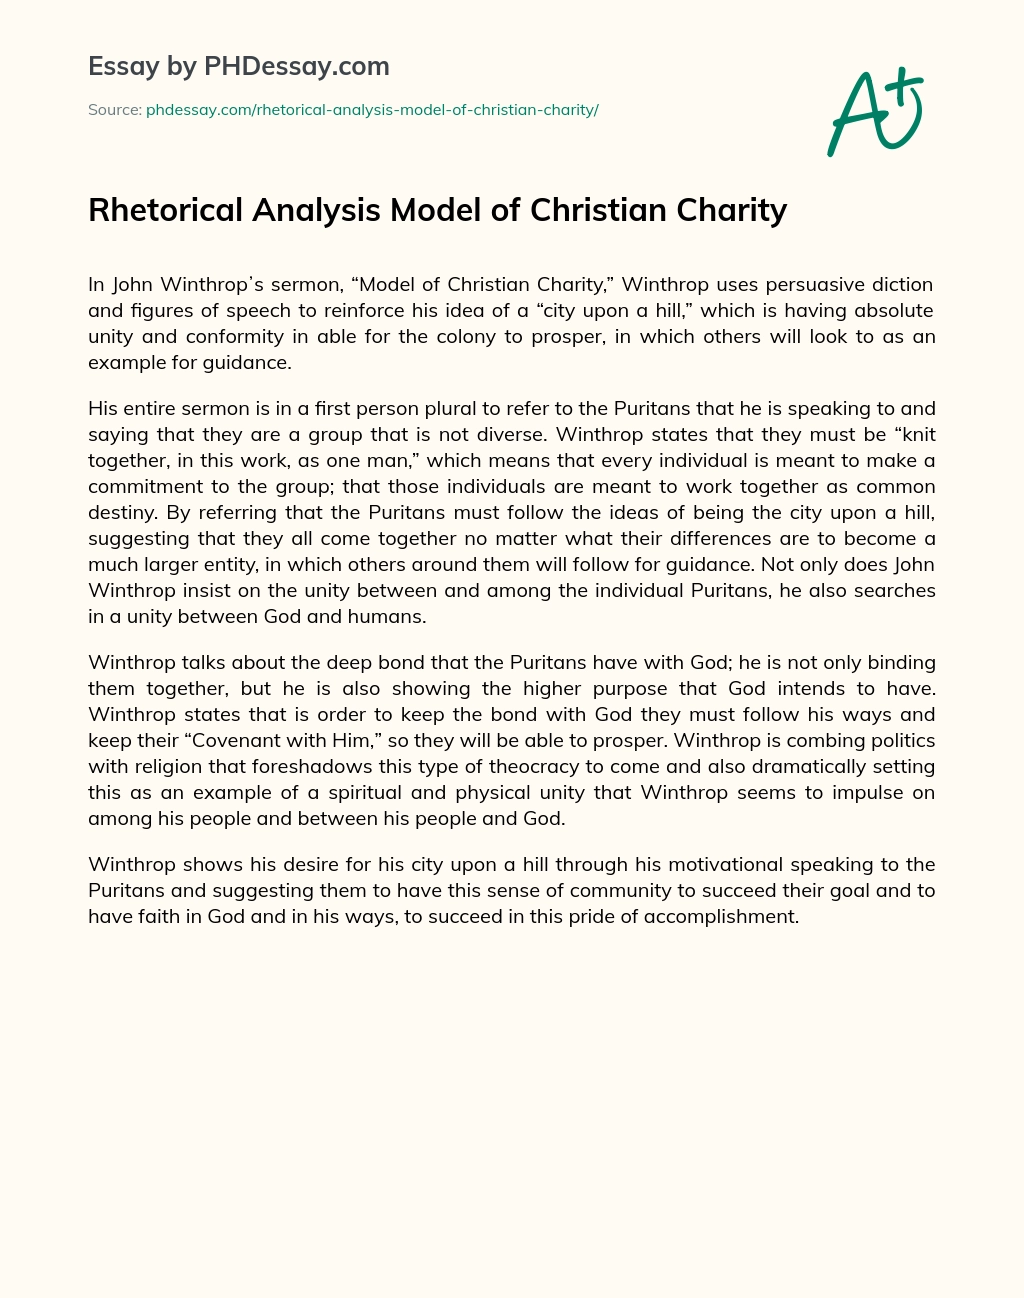 Rhetorical Analysis Model of Christian Charity essay